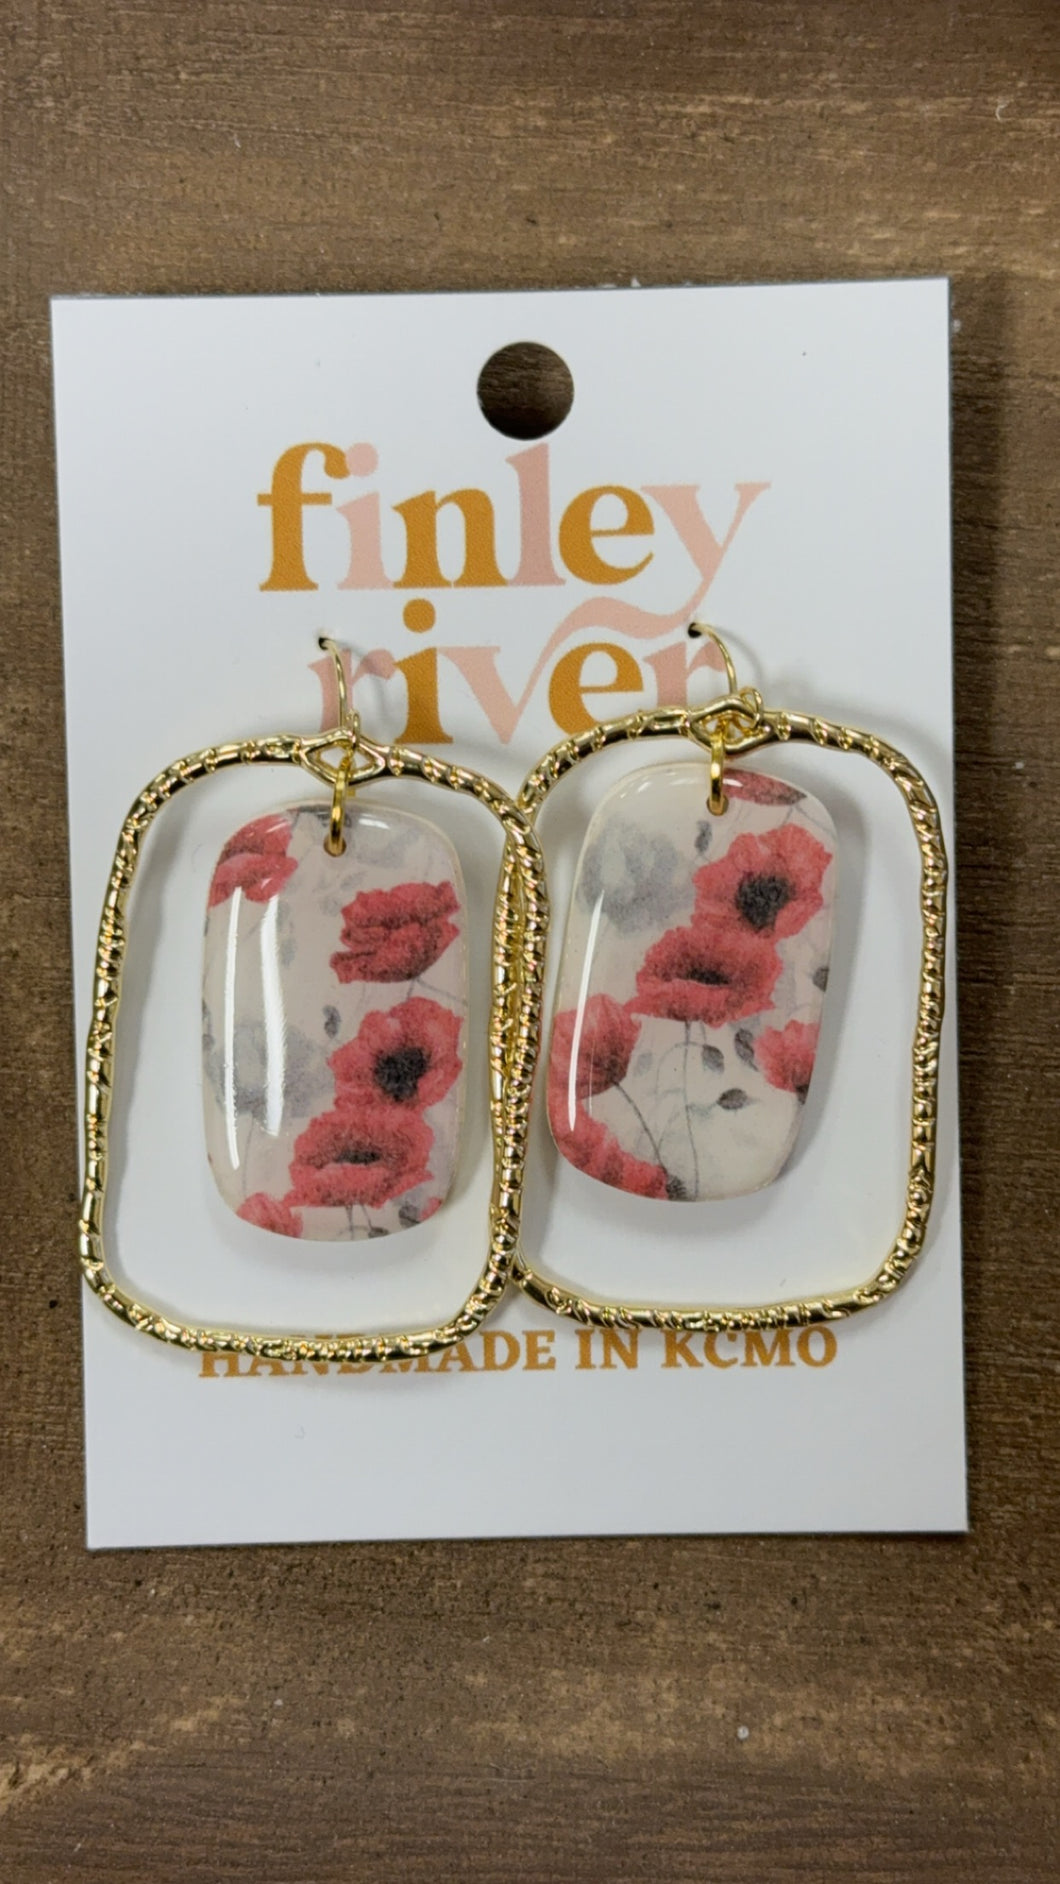 Finley River Ruby Flower Gold Band Earrings